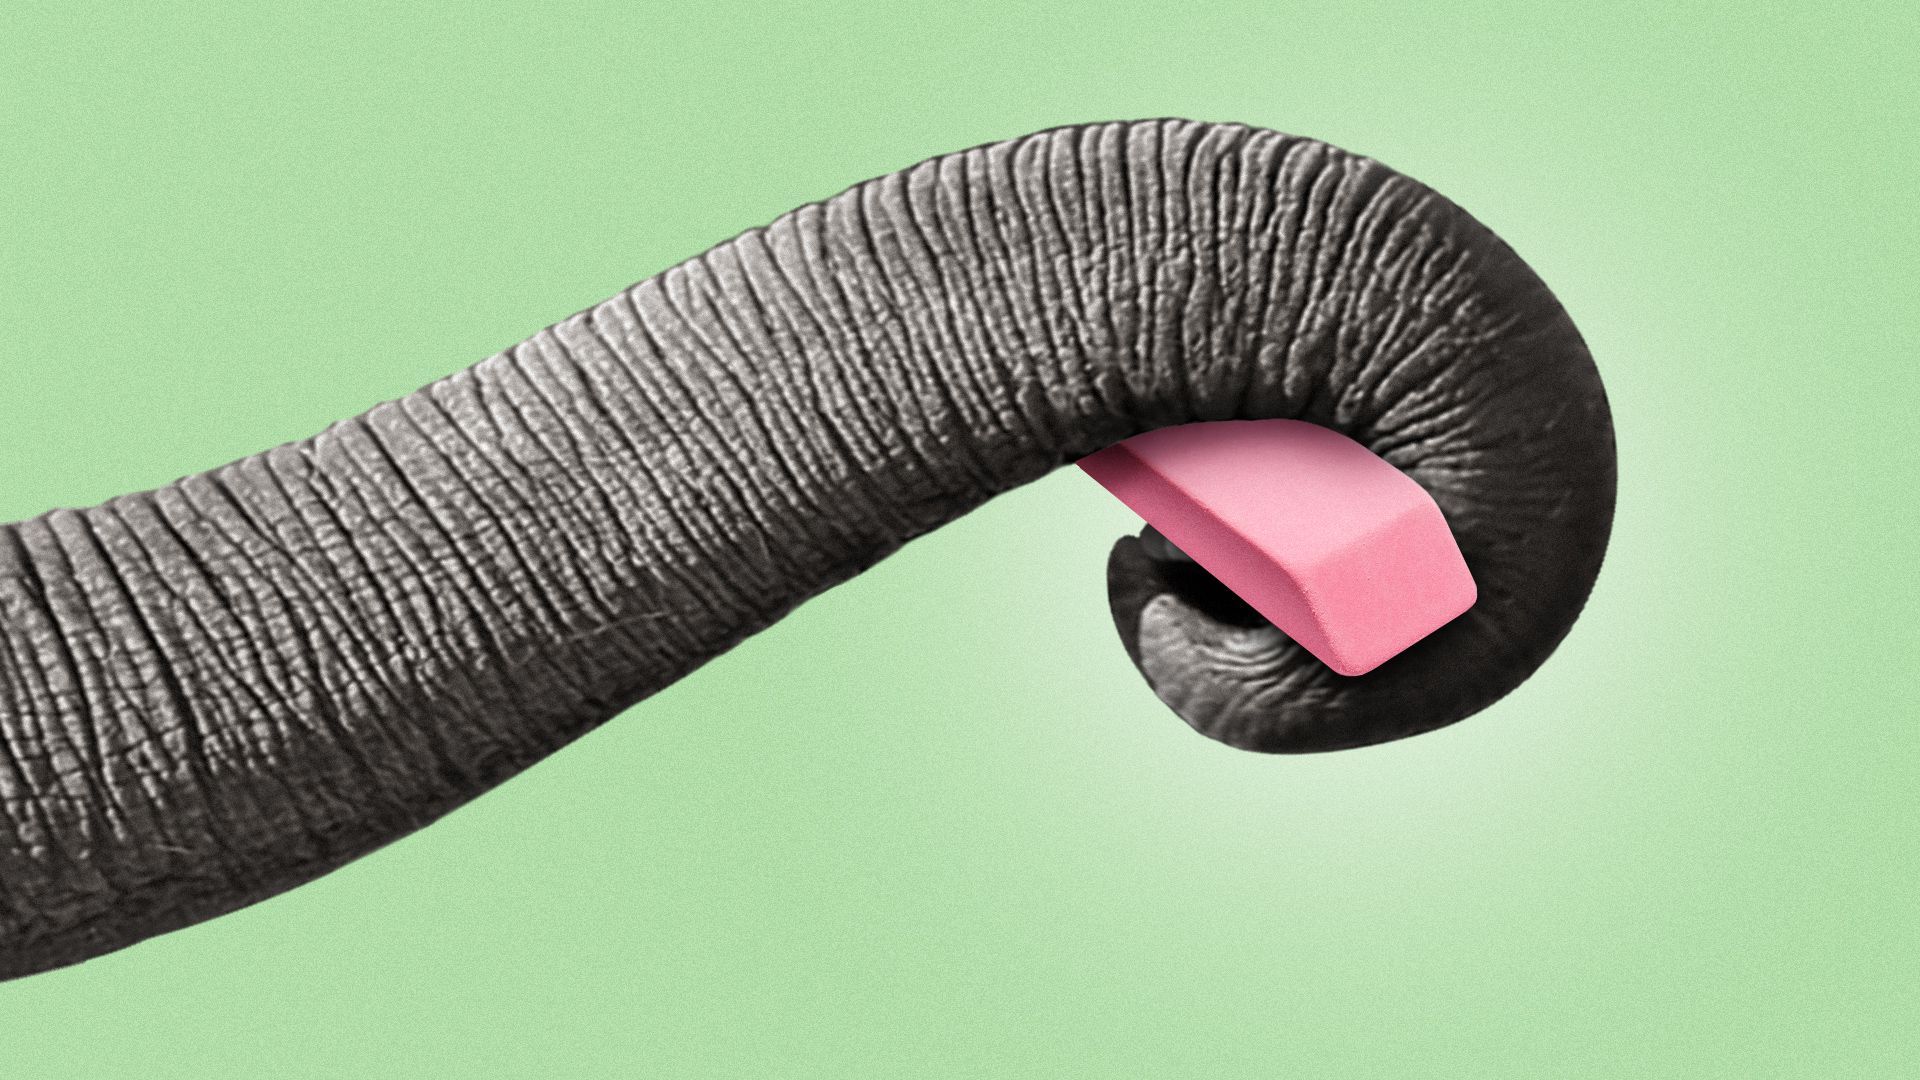 Illustration of an elephant trunk holding a pink rubber eraser.